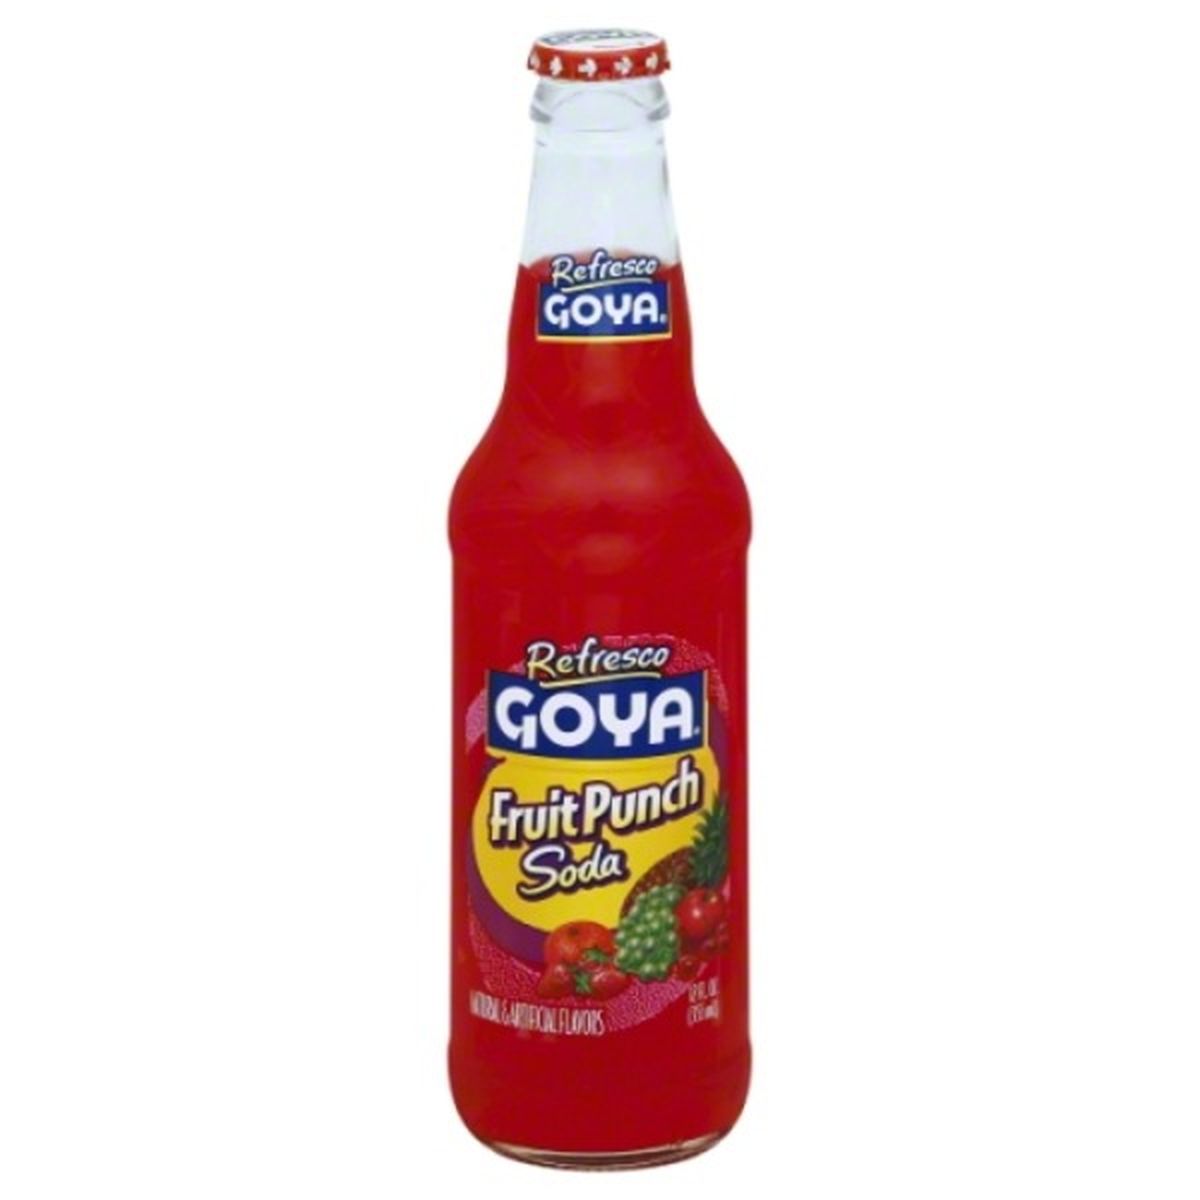 Calories in Goya Refresco Soda, Fruit Punch